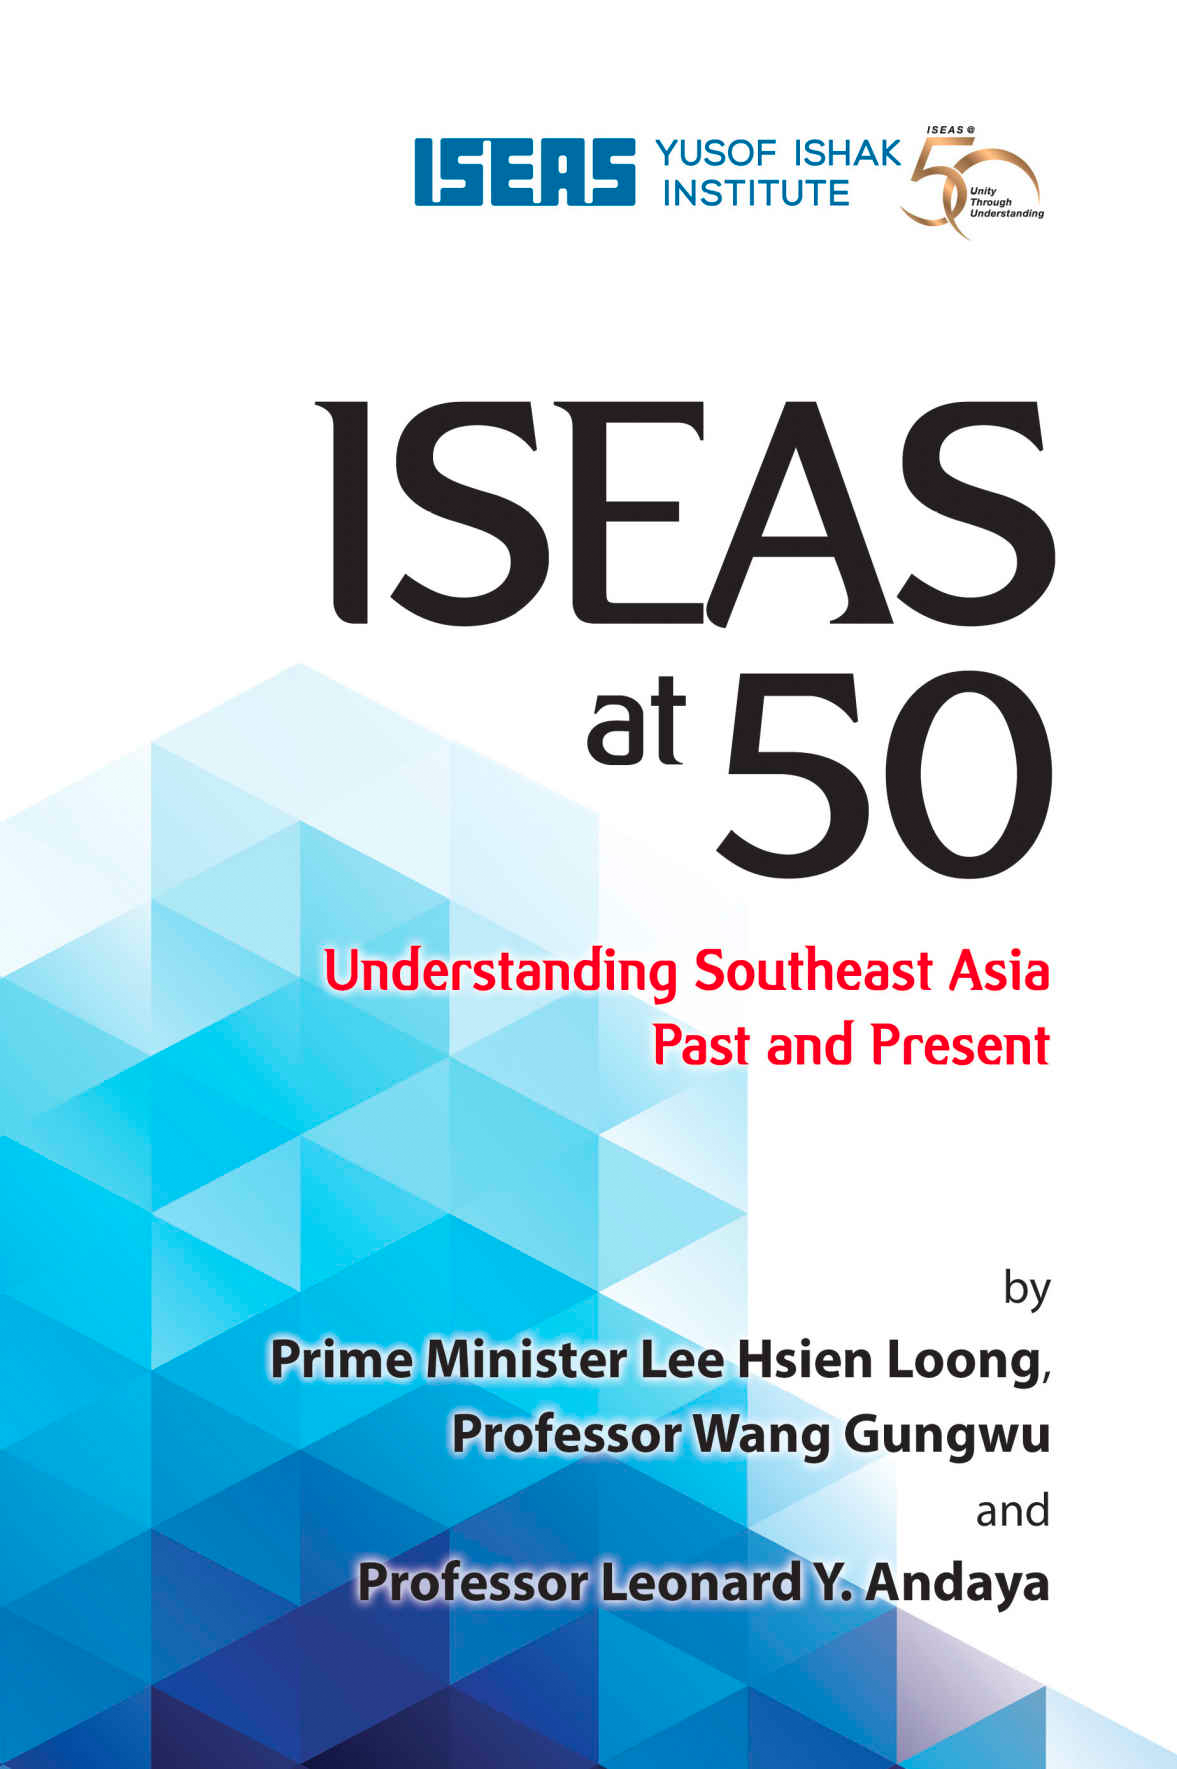 ISEAS@50: Public Lectures by PM Lee Hsien Loong, Professor Wang Gungwu and Professor Leonard Andaya